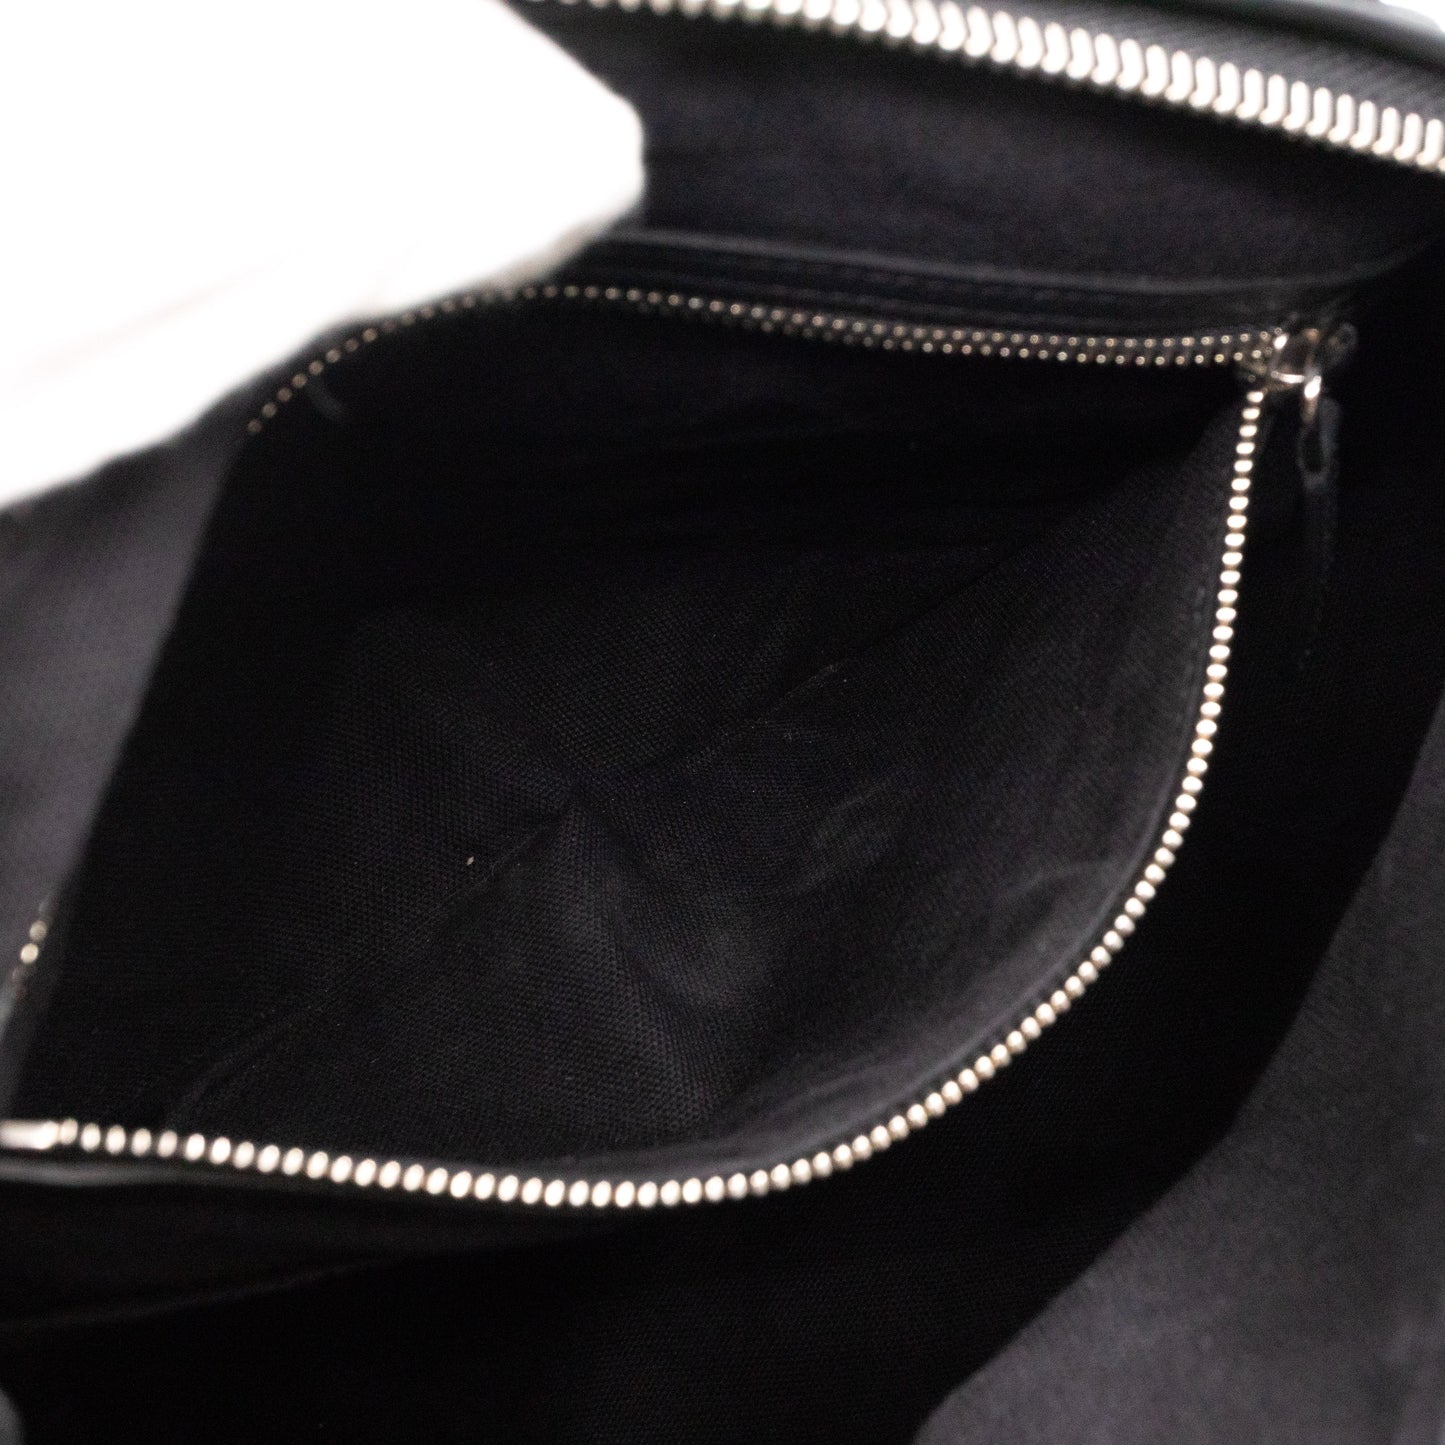 Pandora Backpack Black Leather